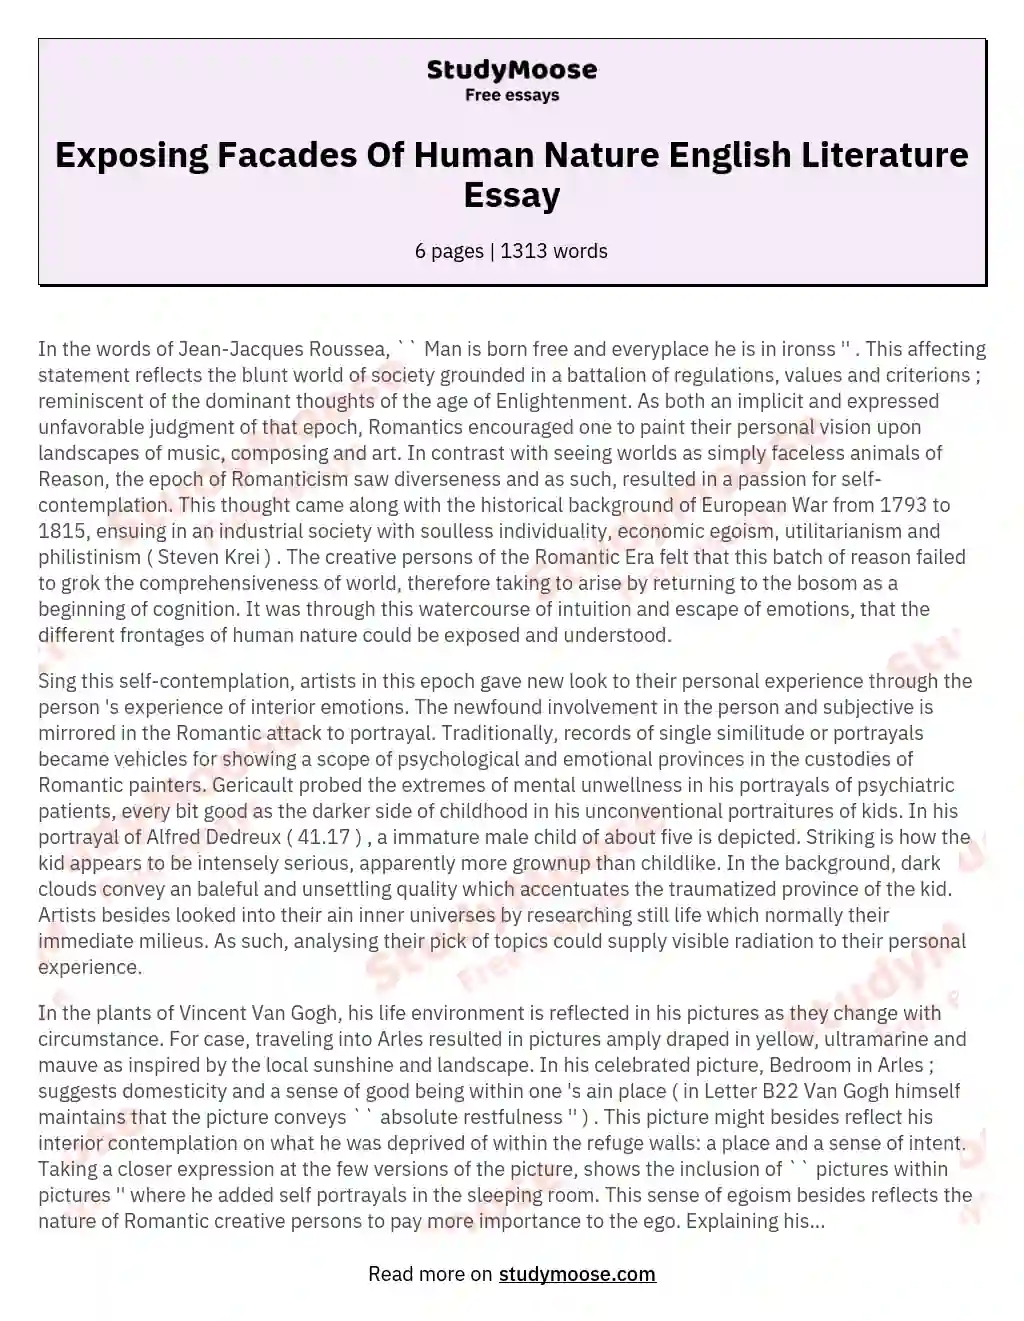 Exposing Facades Of Human Nature English Literature Essay essay